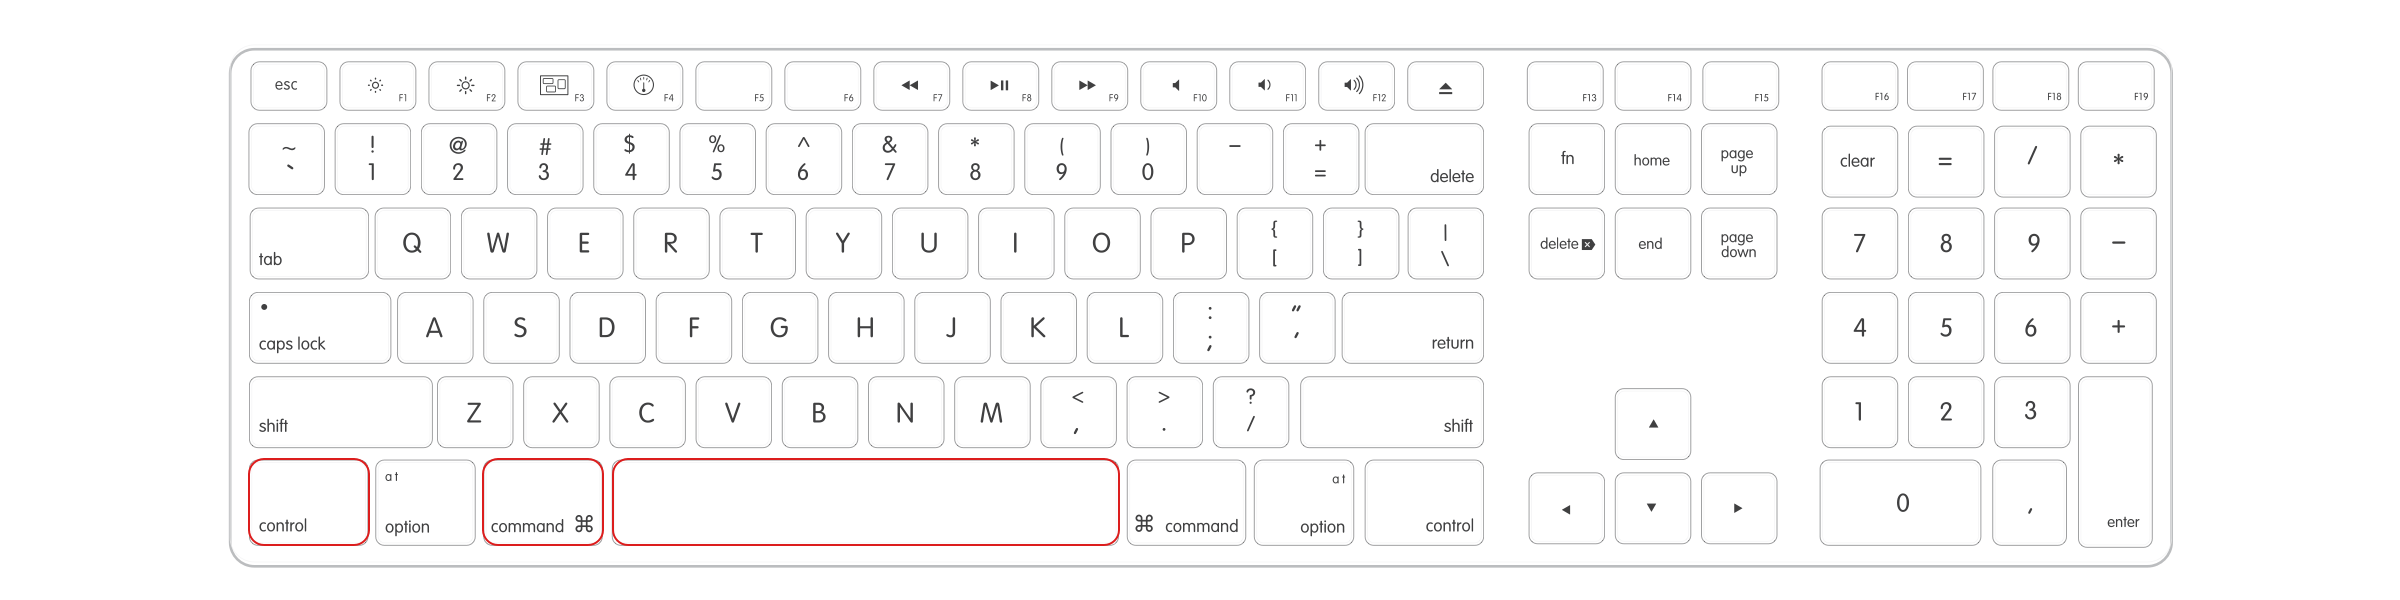 keyboard shortcuts for emojis